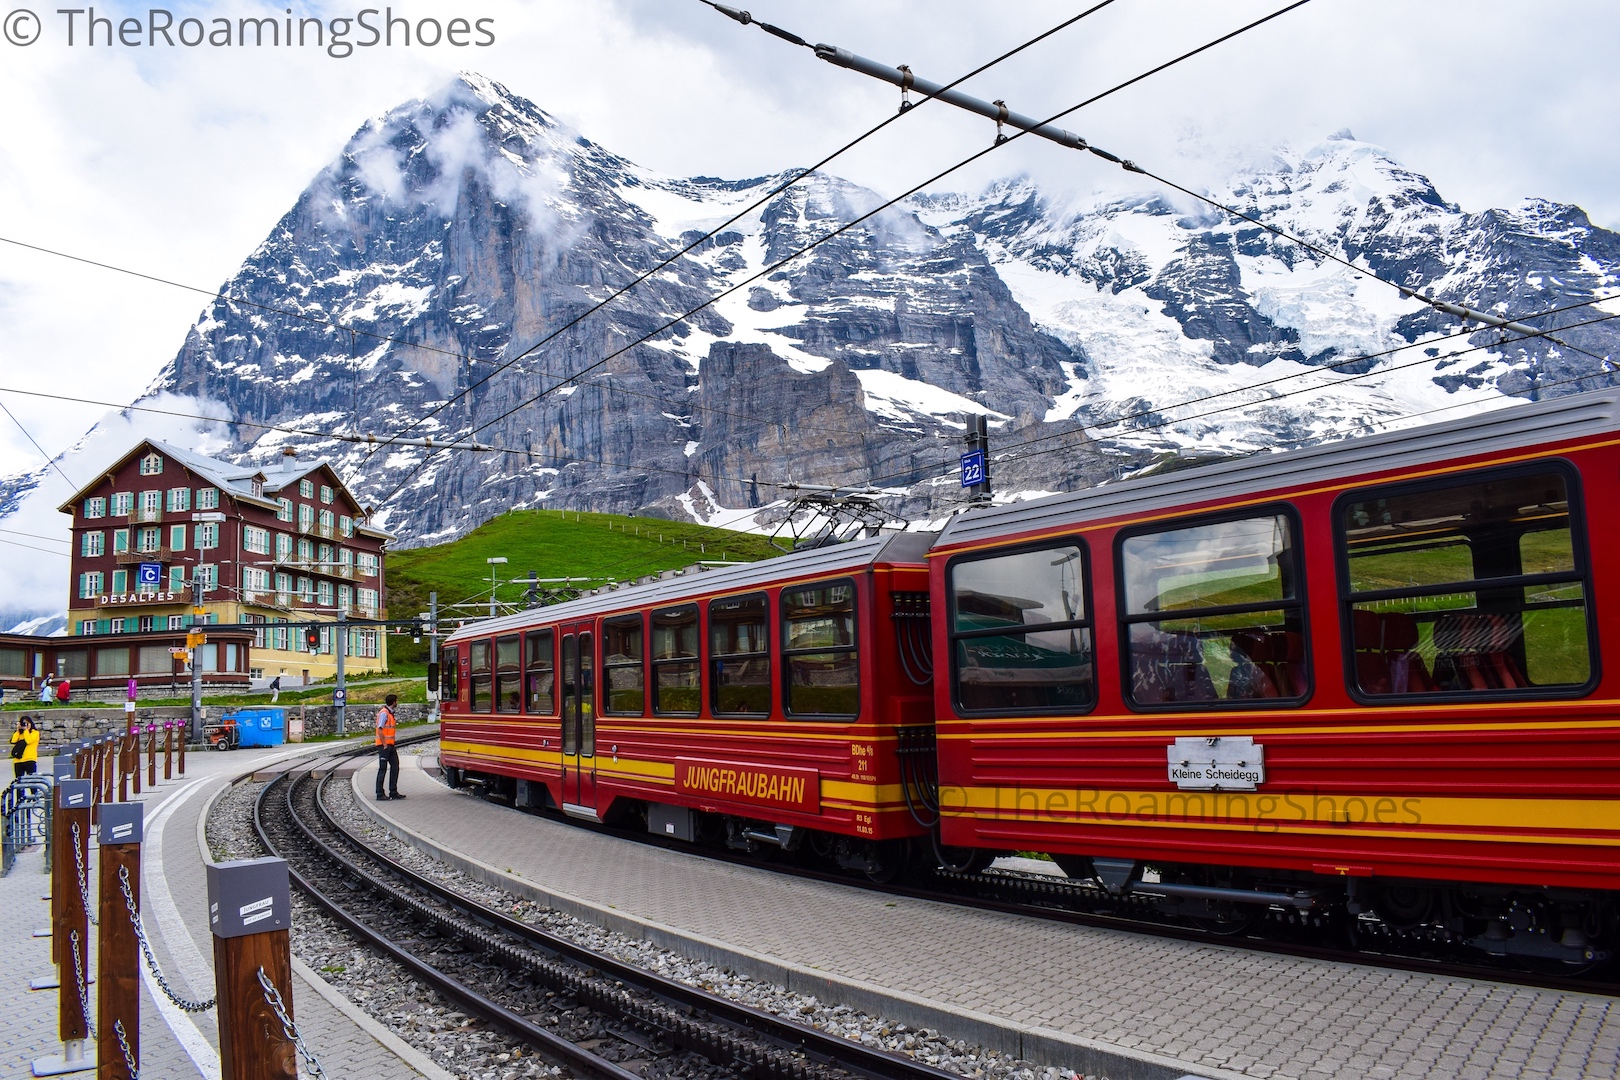 The train to Jungfraujoch